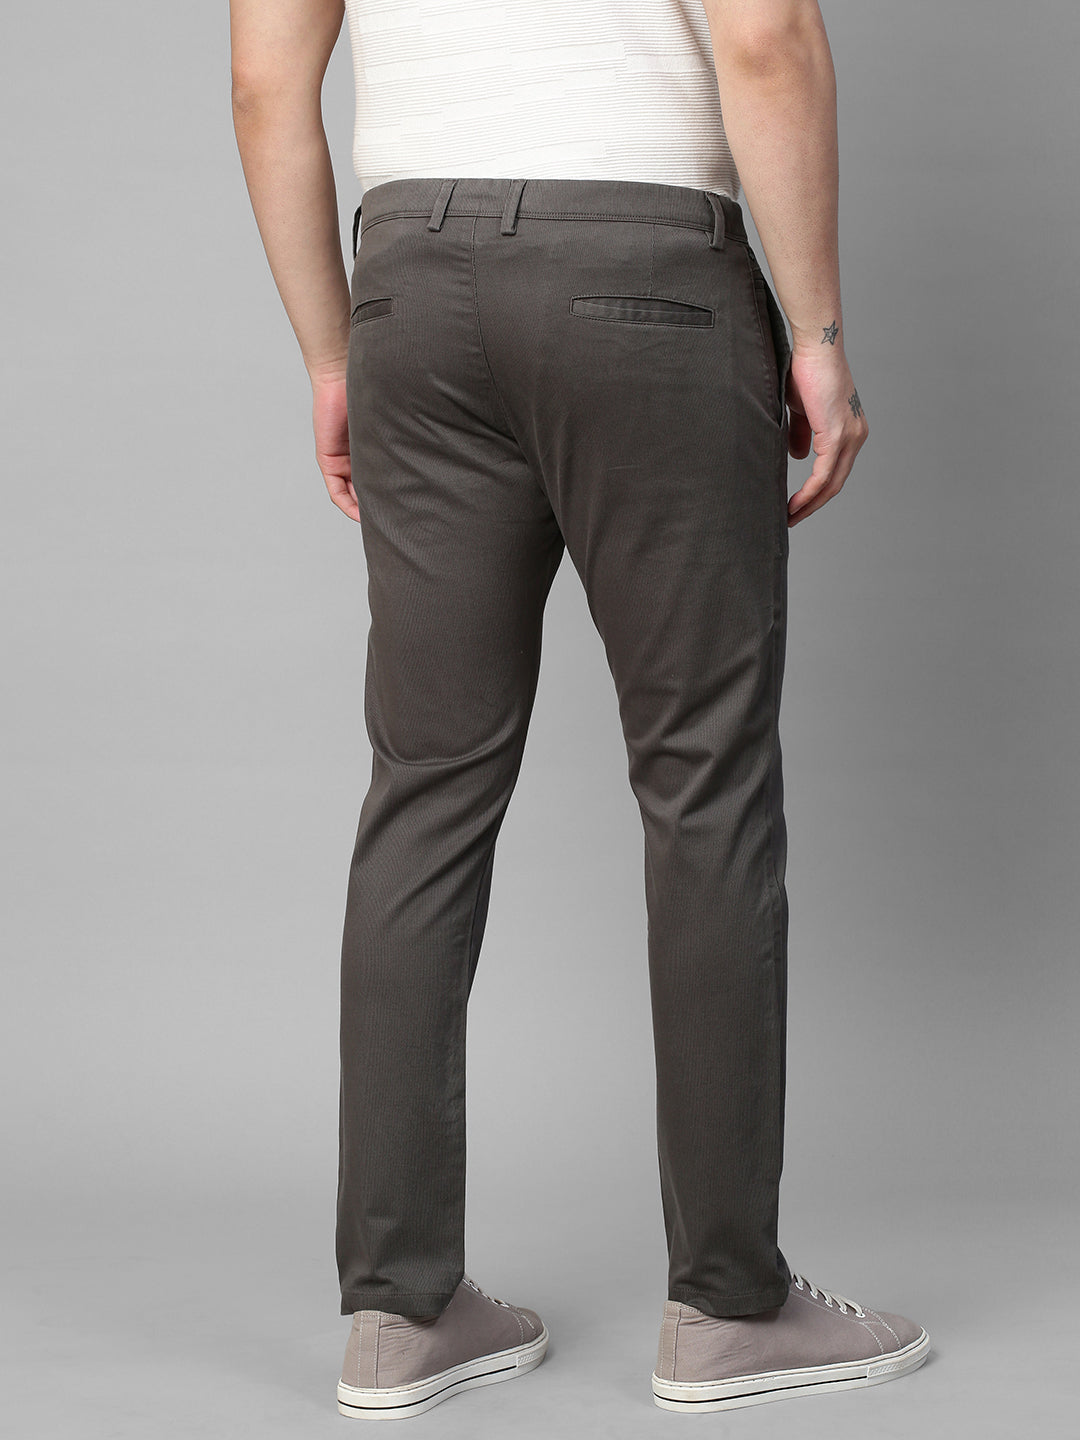 Genips Men's Dark Grey Cotton Stretch Caribbean Slim Fit Print Trousers